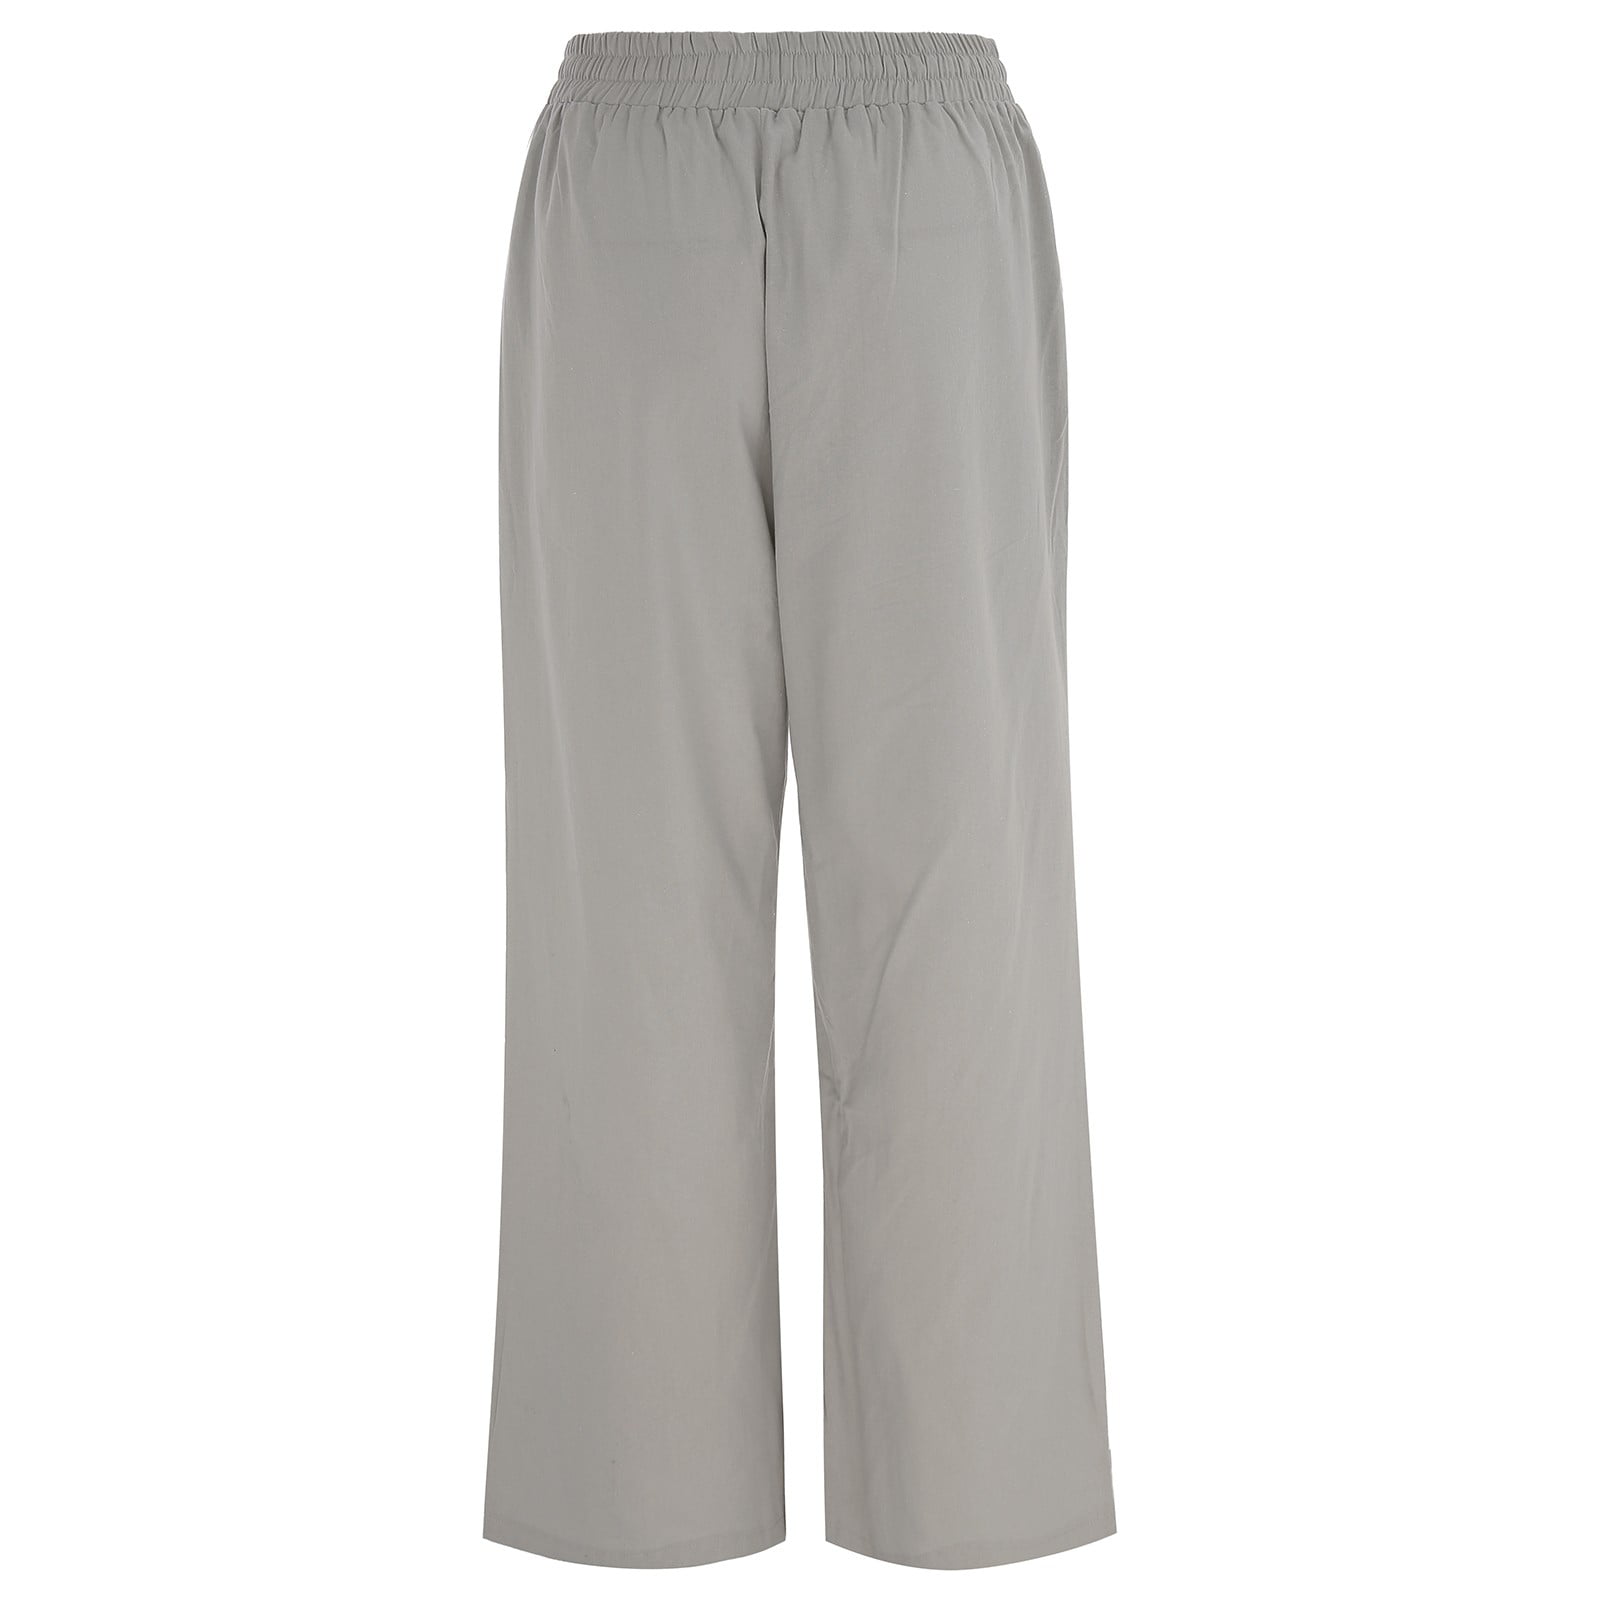 Linen Palazzo Pants for Women,Women's Casual Summer Capri Pants Cotton Linen  Print Wide Leg Ankle Pants with Pockets W08-grey X-Large